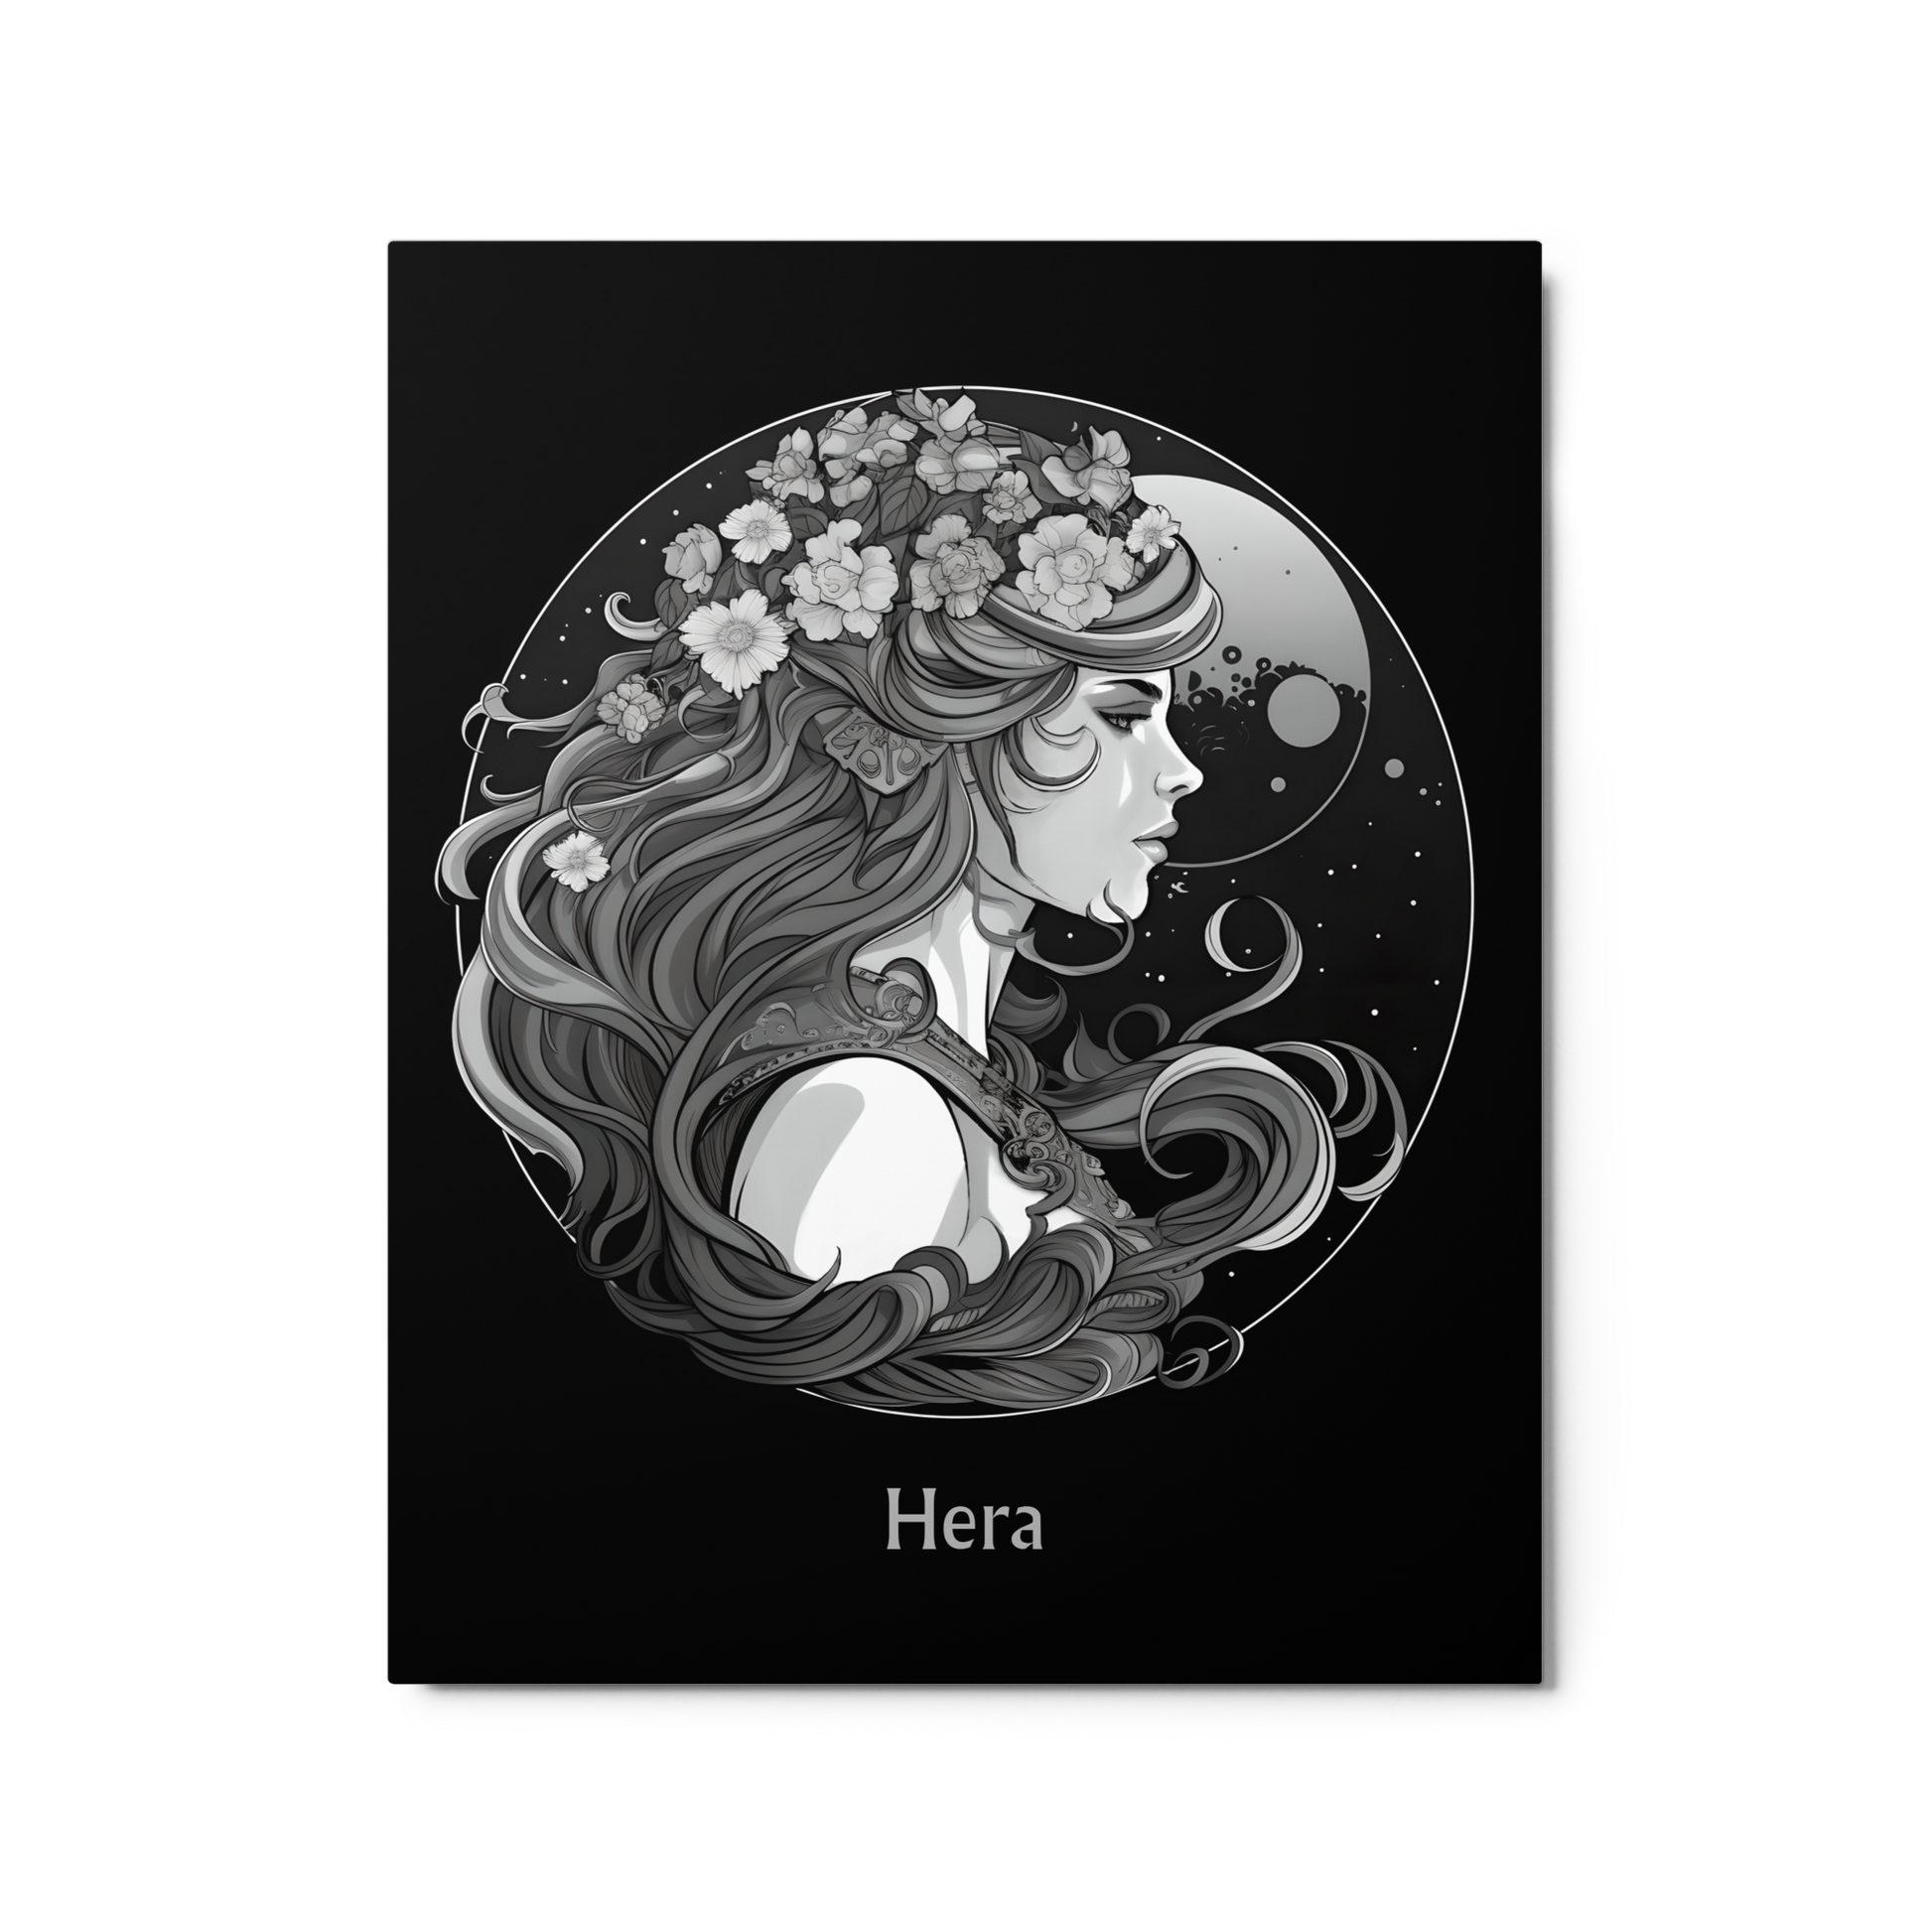 Hera's Devotion - Black and White Hanging Wall Art High Quality Metal Print DrawDadDraw